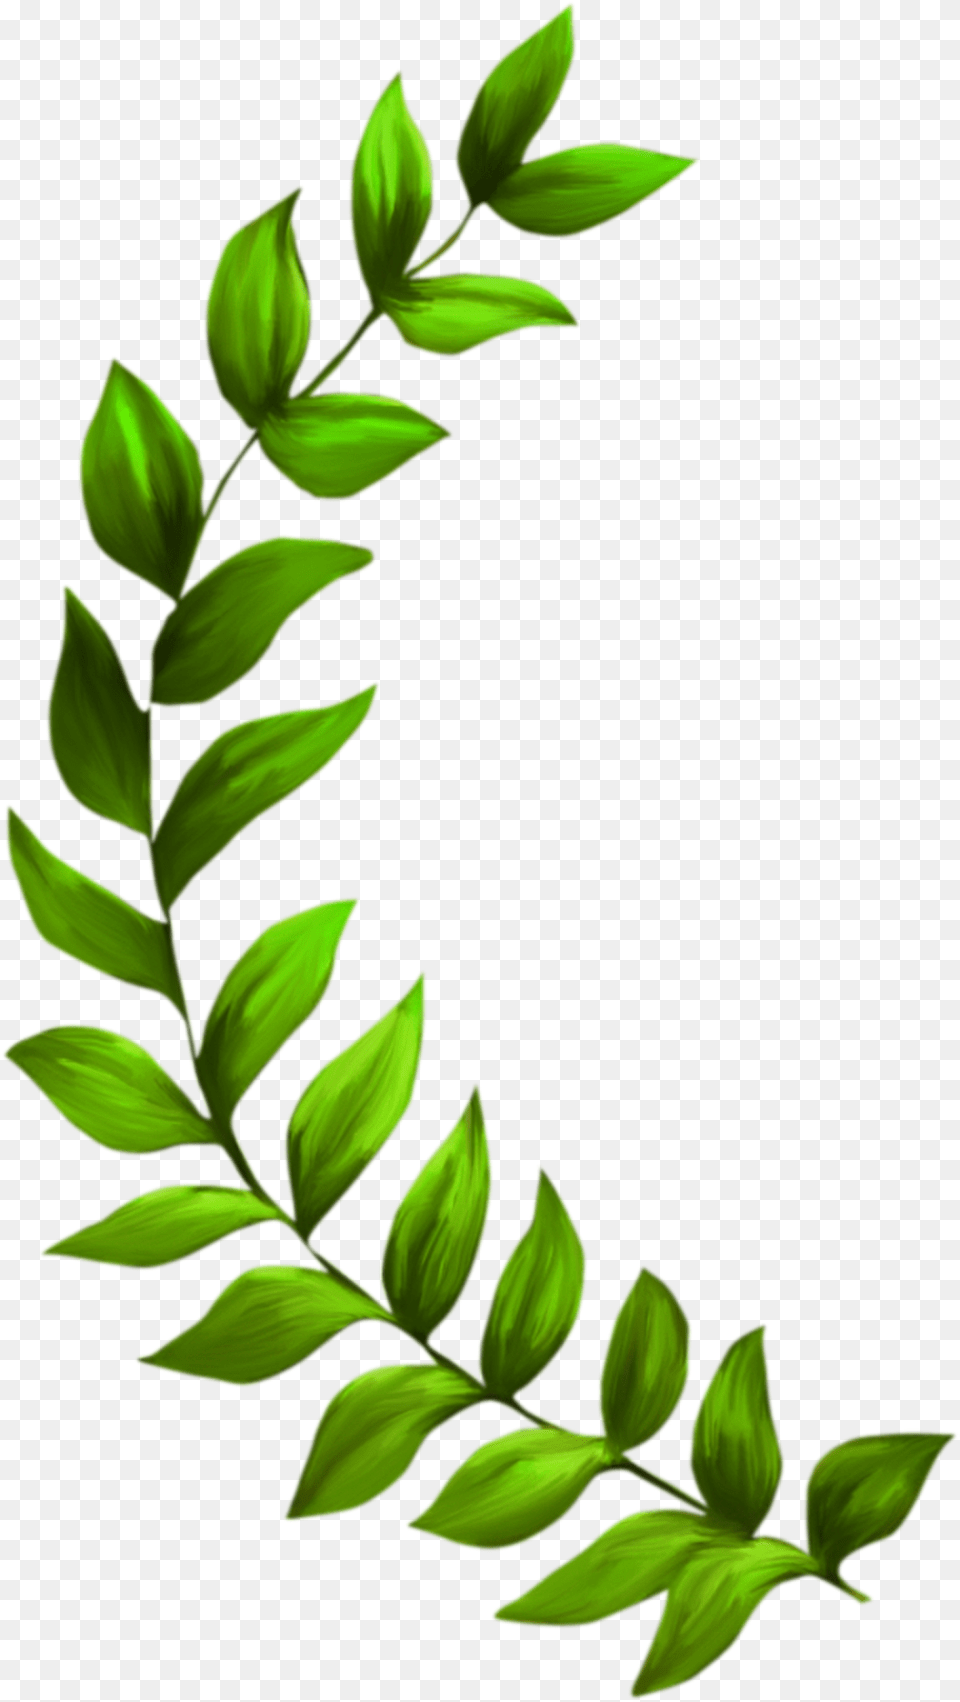 Seagrass Plant Seaweed Clip Art, Vegetation, Tree, Moss, Leaf Png Image